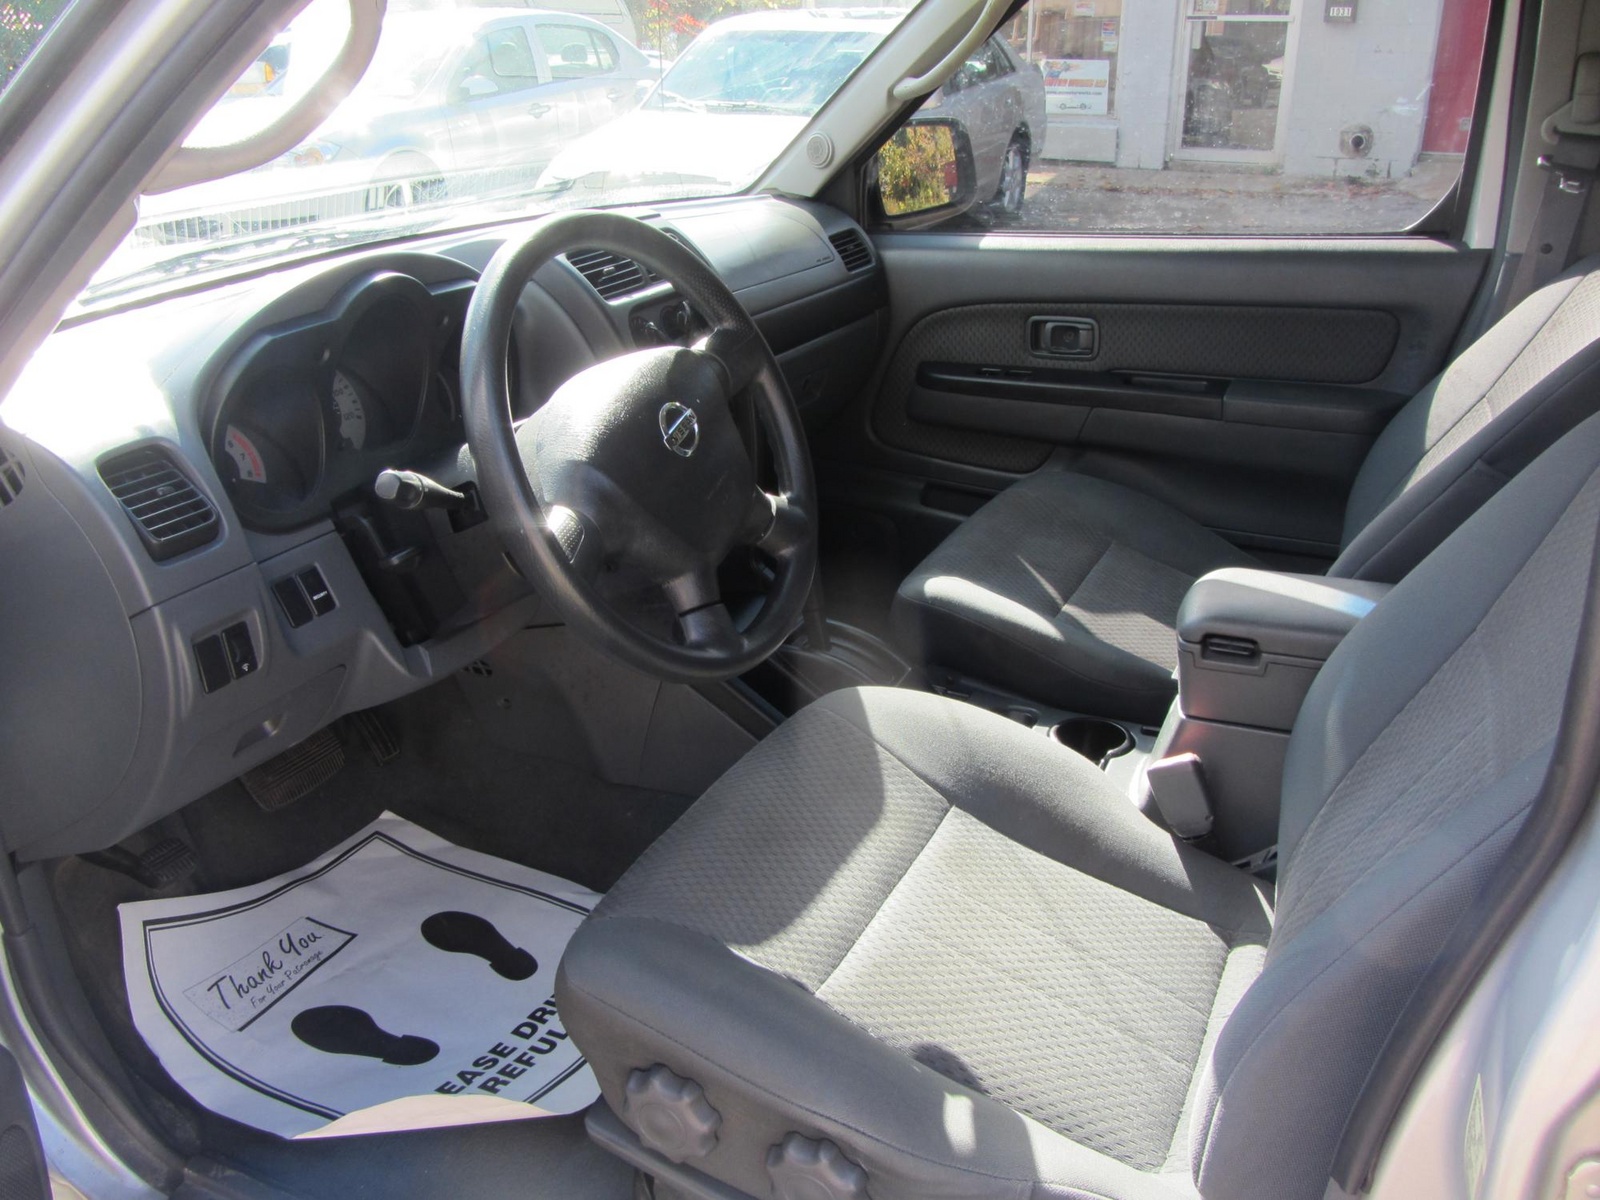 2004 Nissan xterra interior dimensions #8